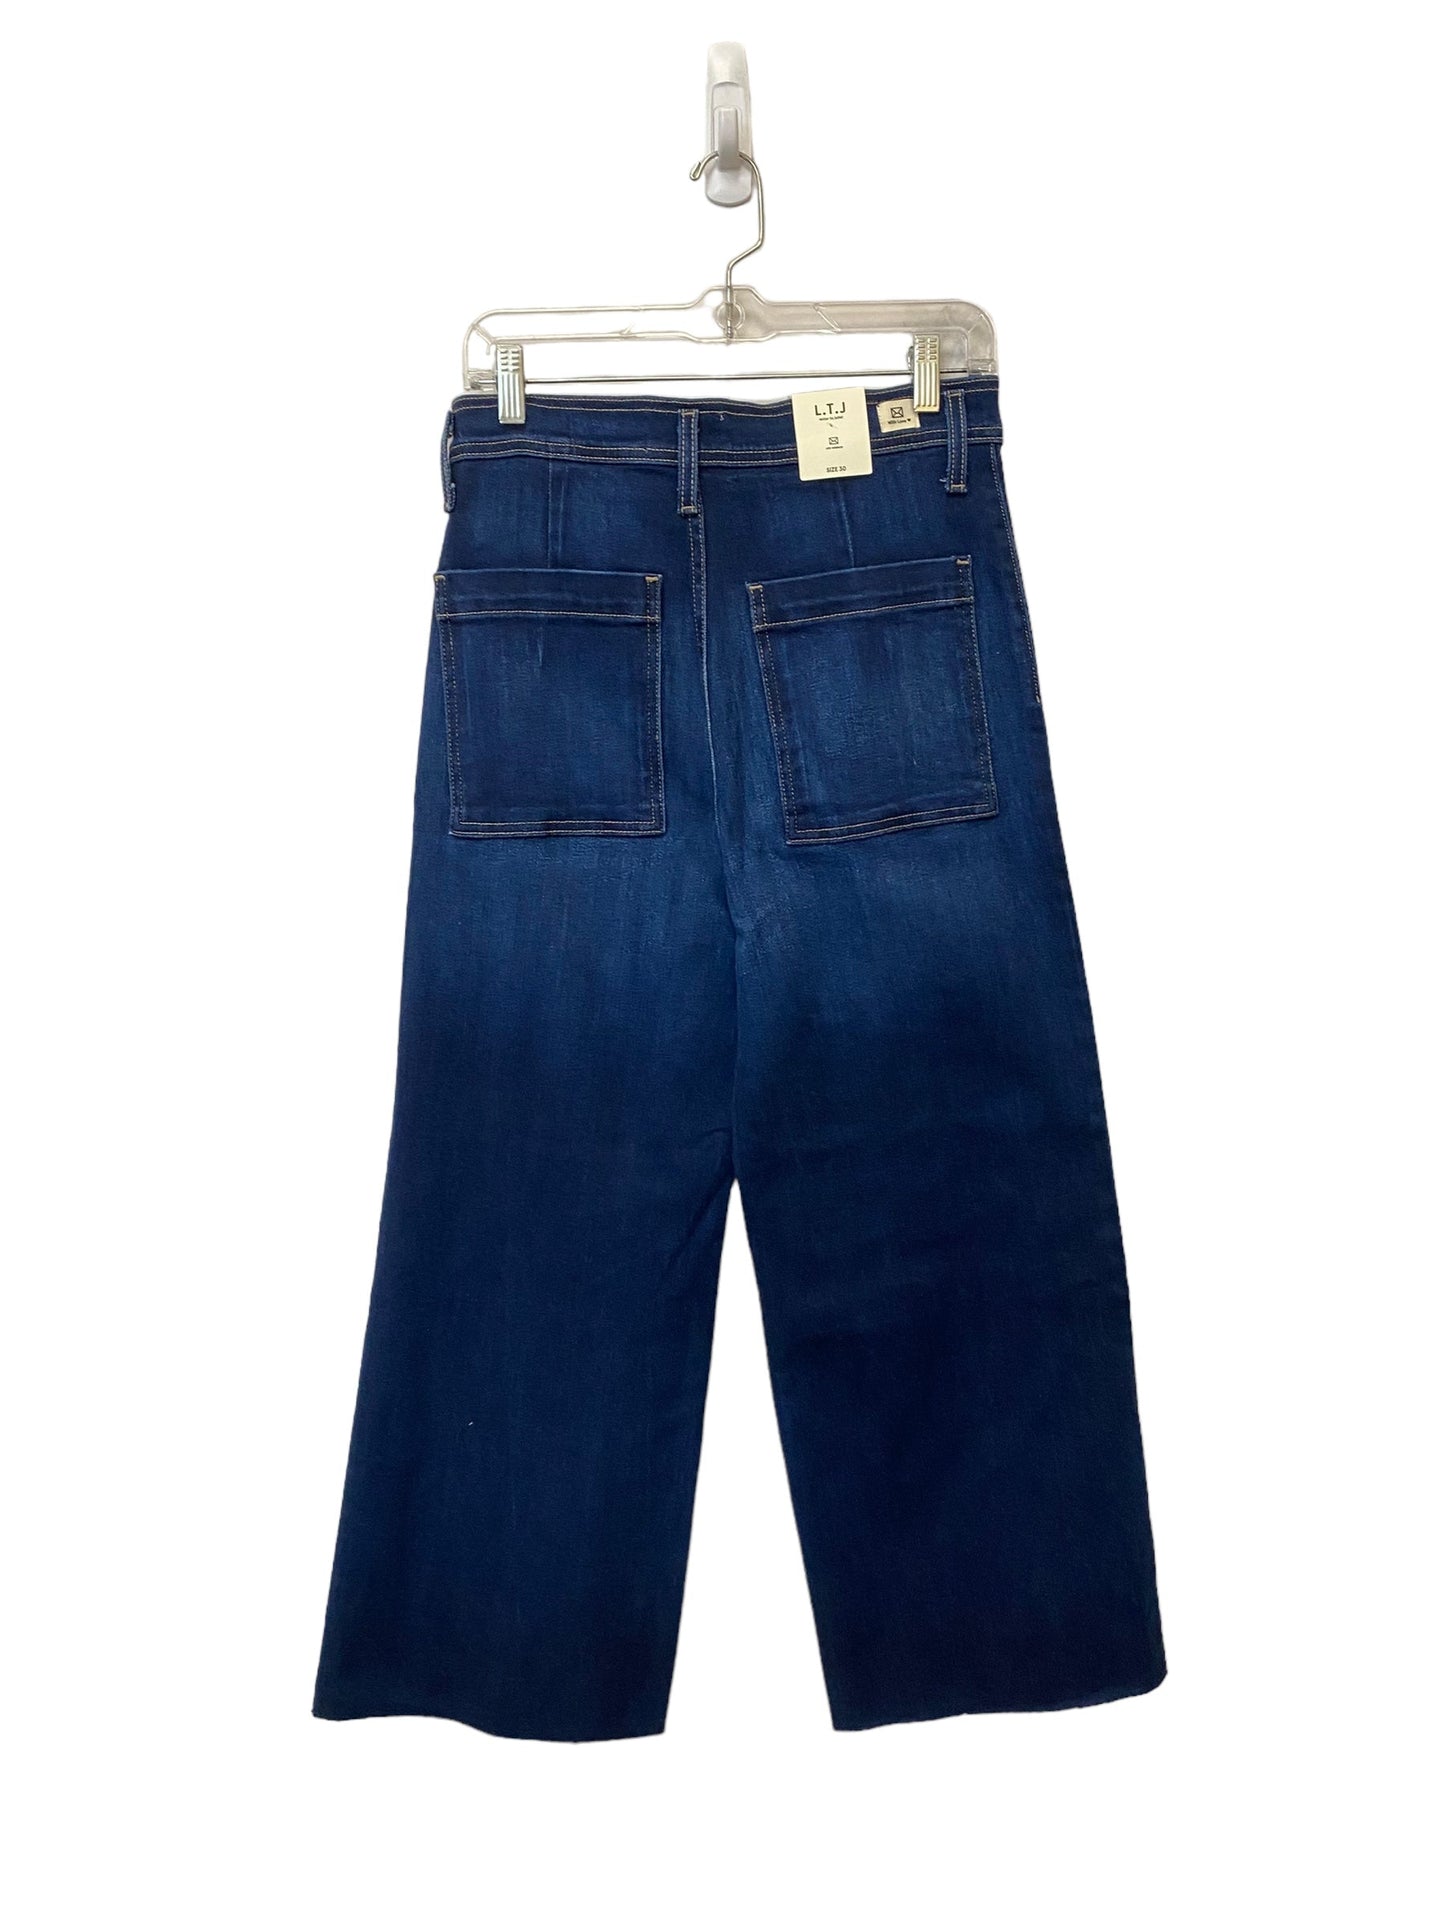 Blue Denim Jeans Straight Clothes Mentor, Size 30